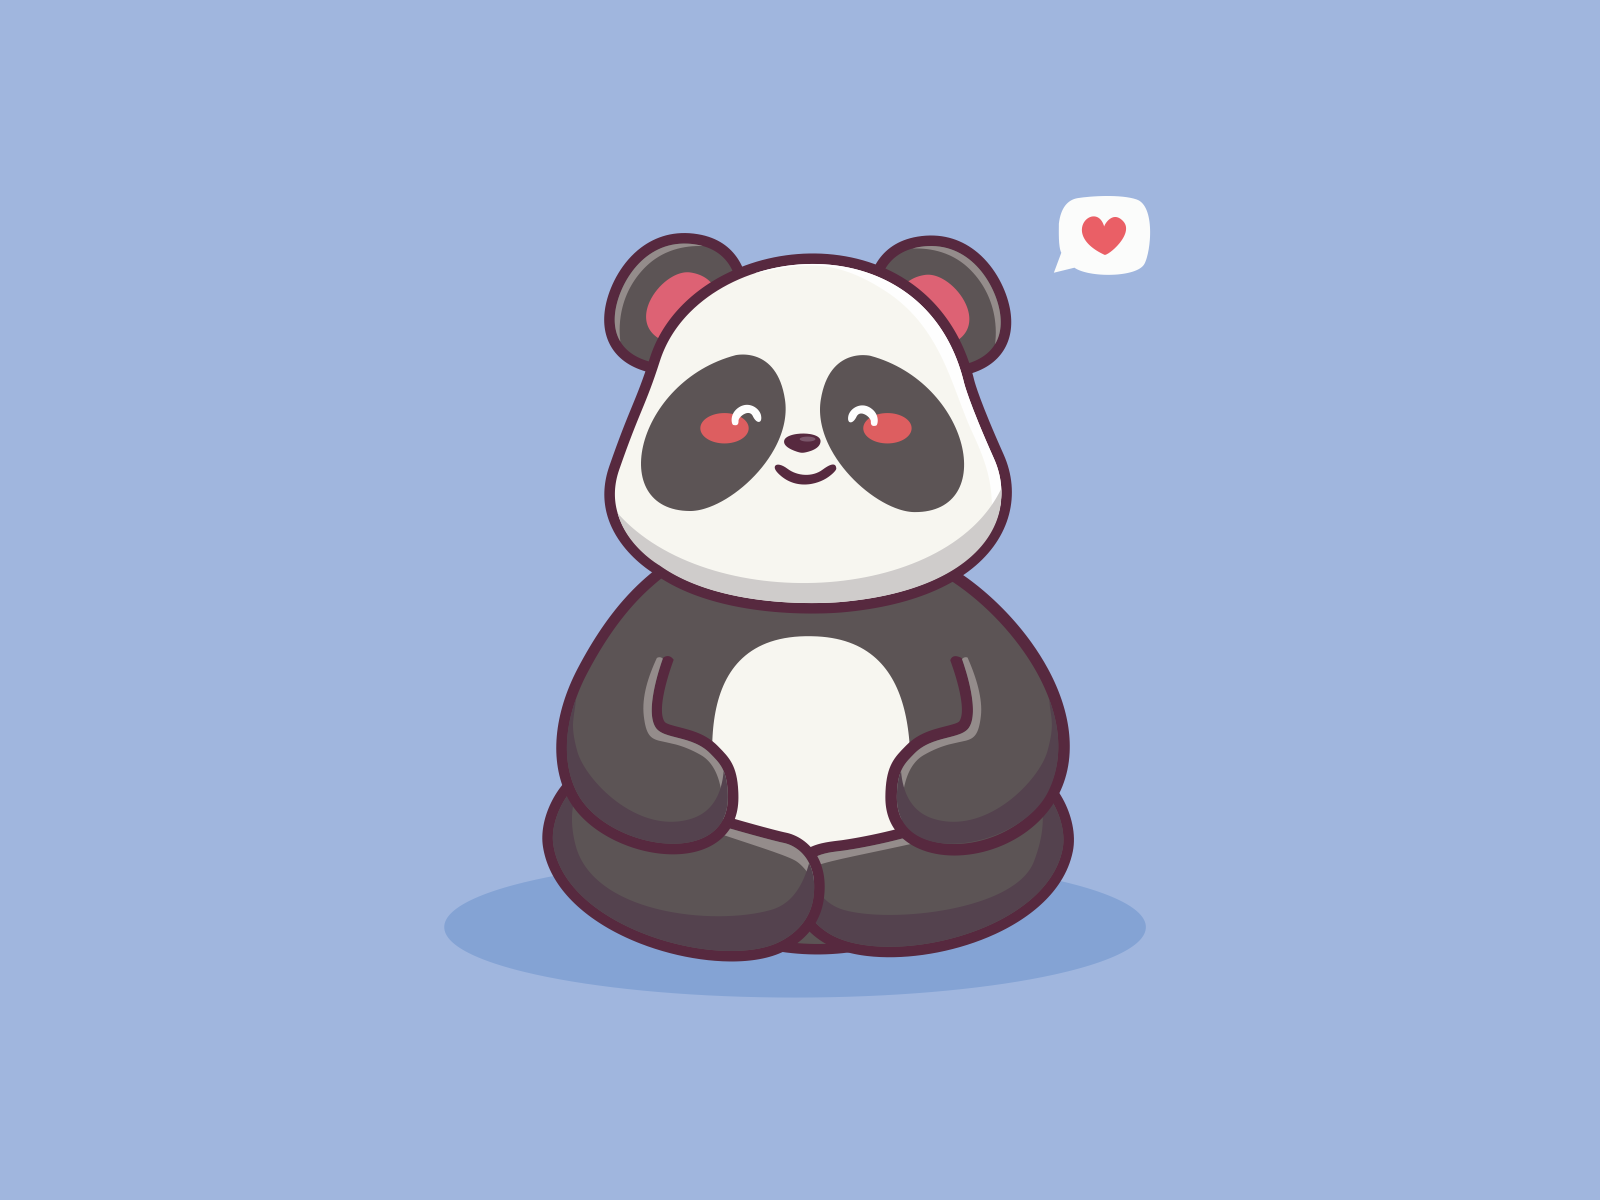 Cute panda meditation cute panda yoga cartoon icon illustration by